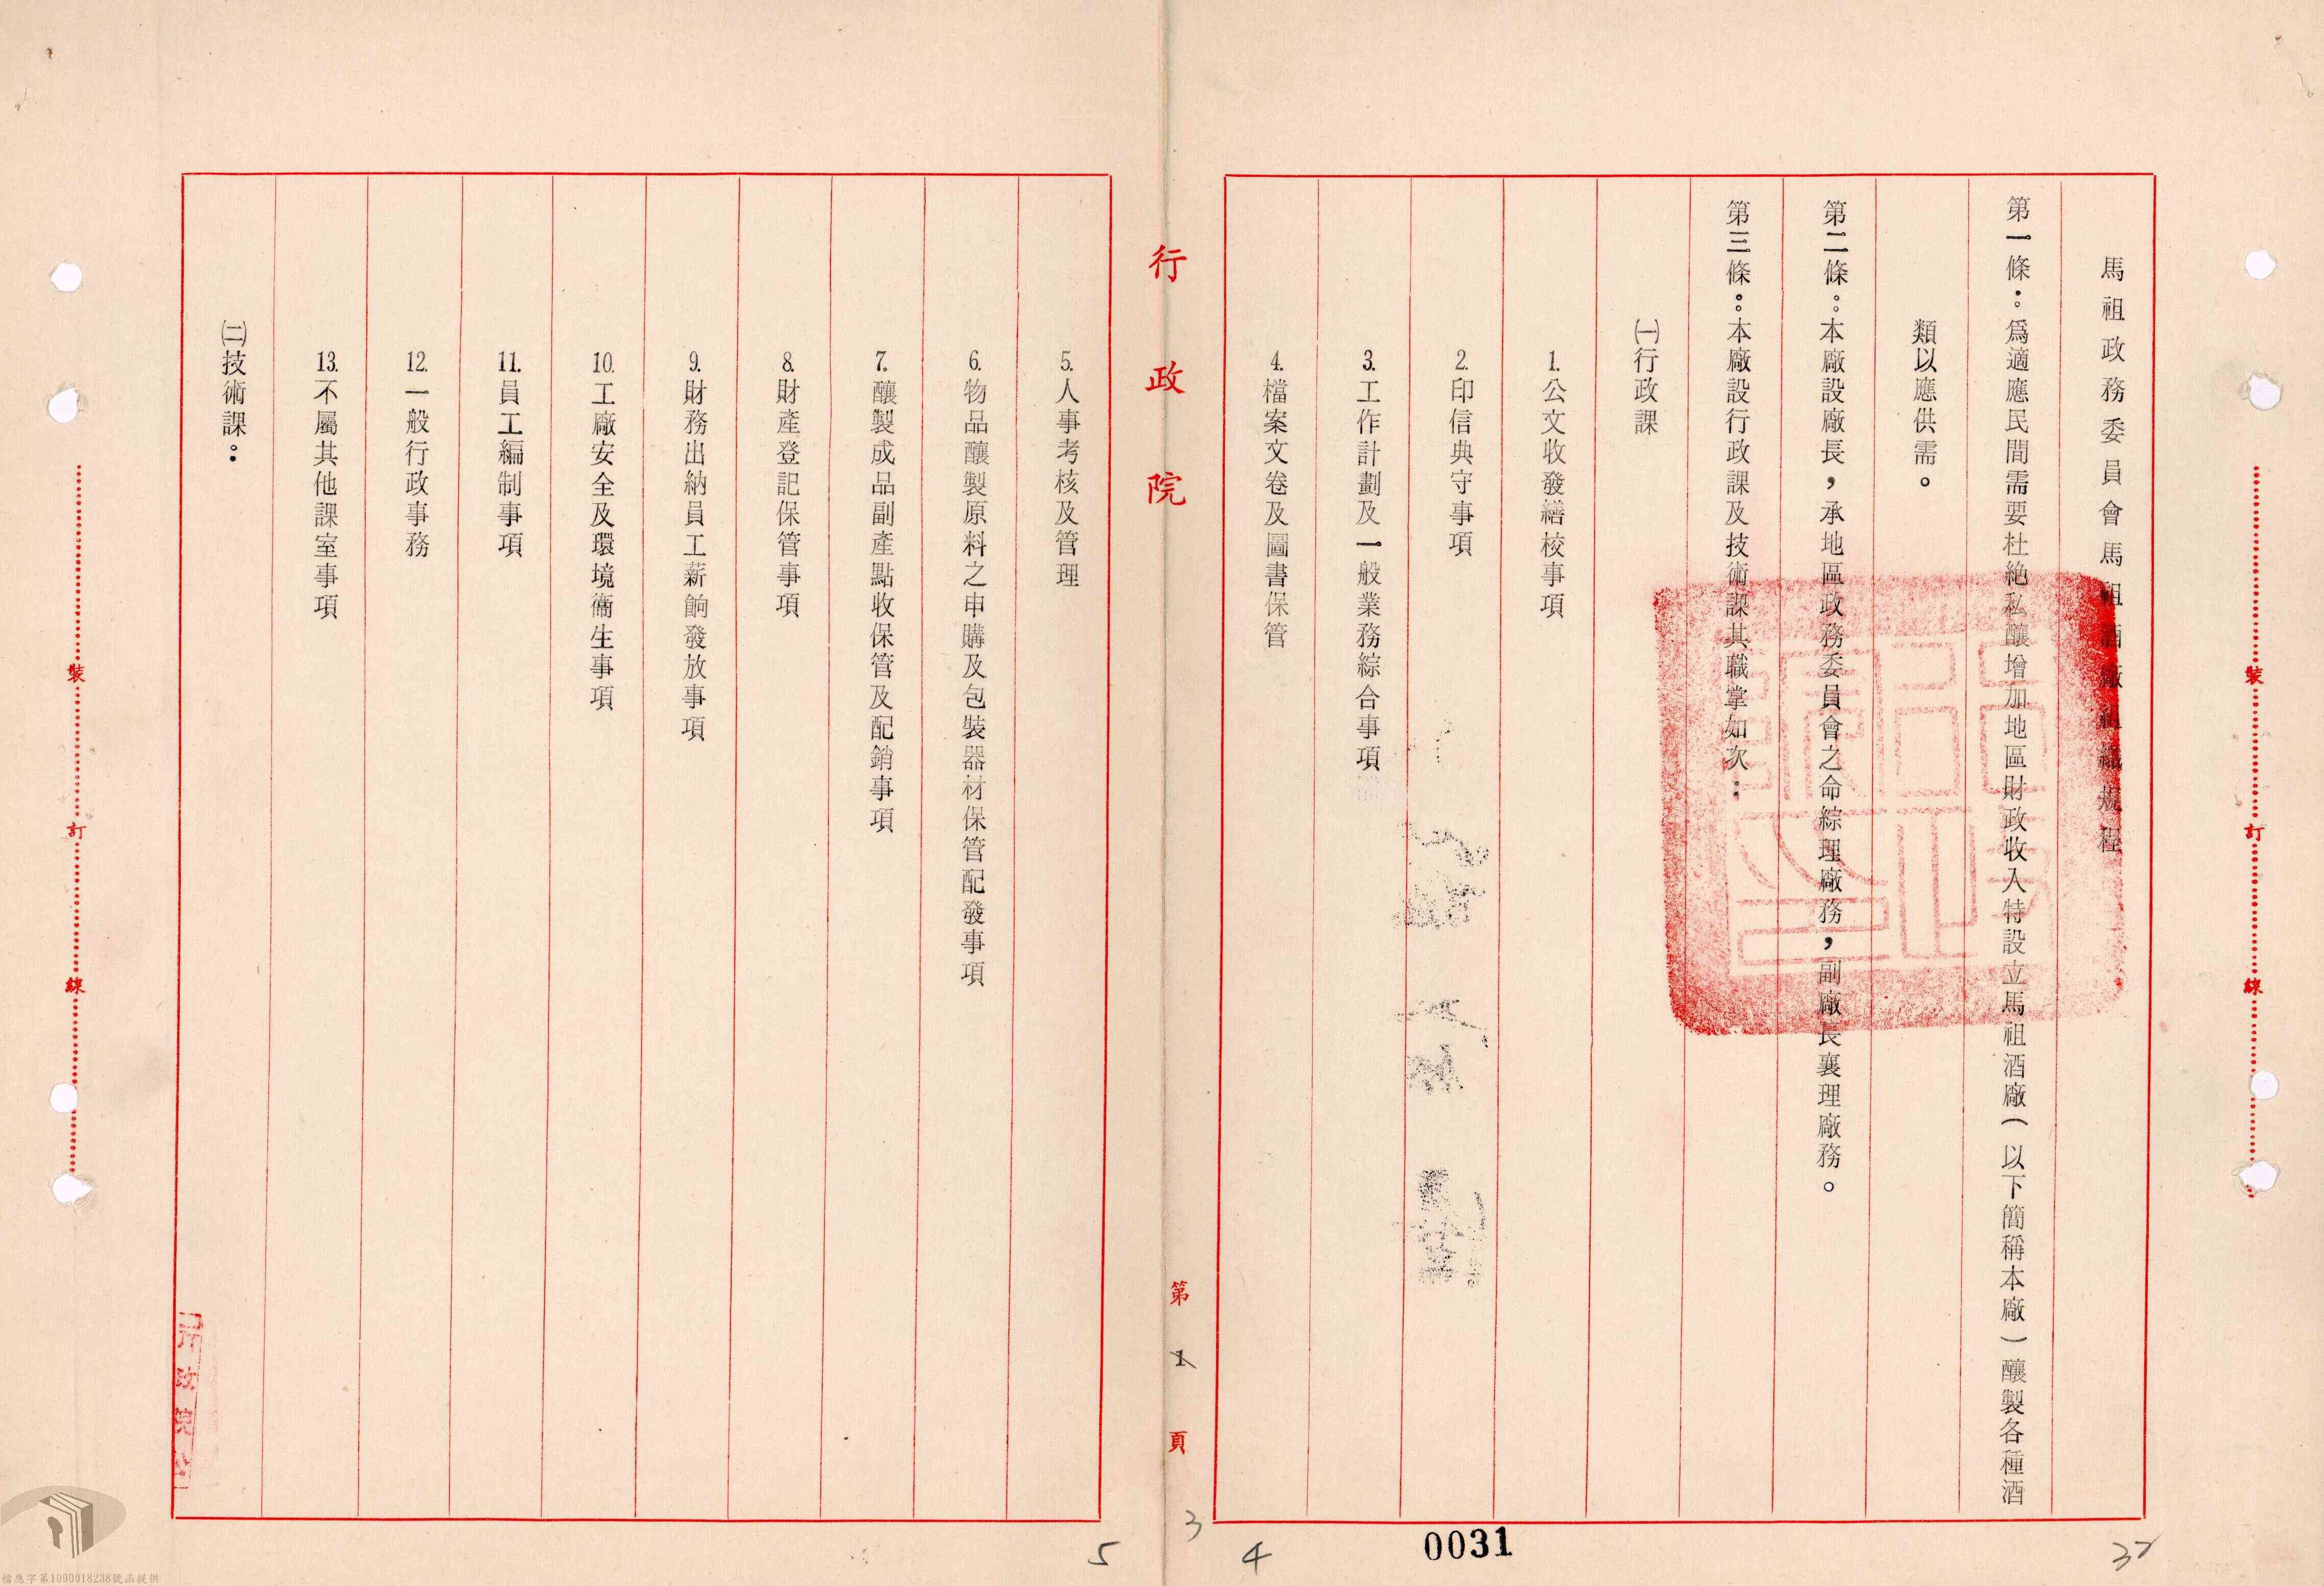 December 1971, Organizational Regulations of the Matsu Distillery, Matsu Military Administrative Committee, during the period of military administration.